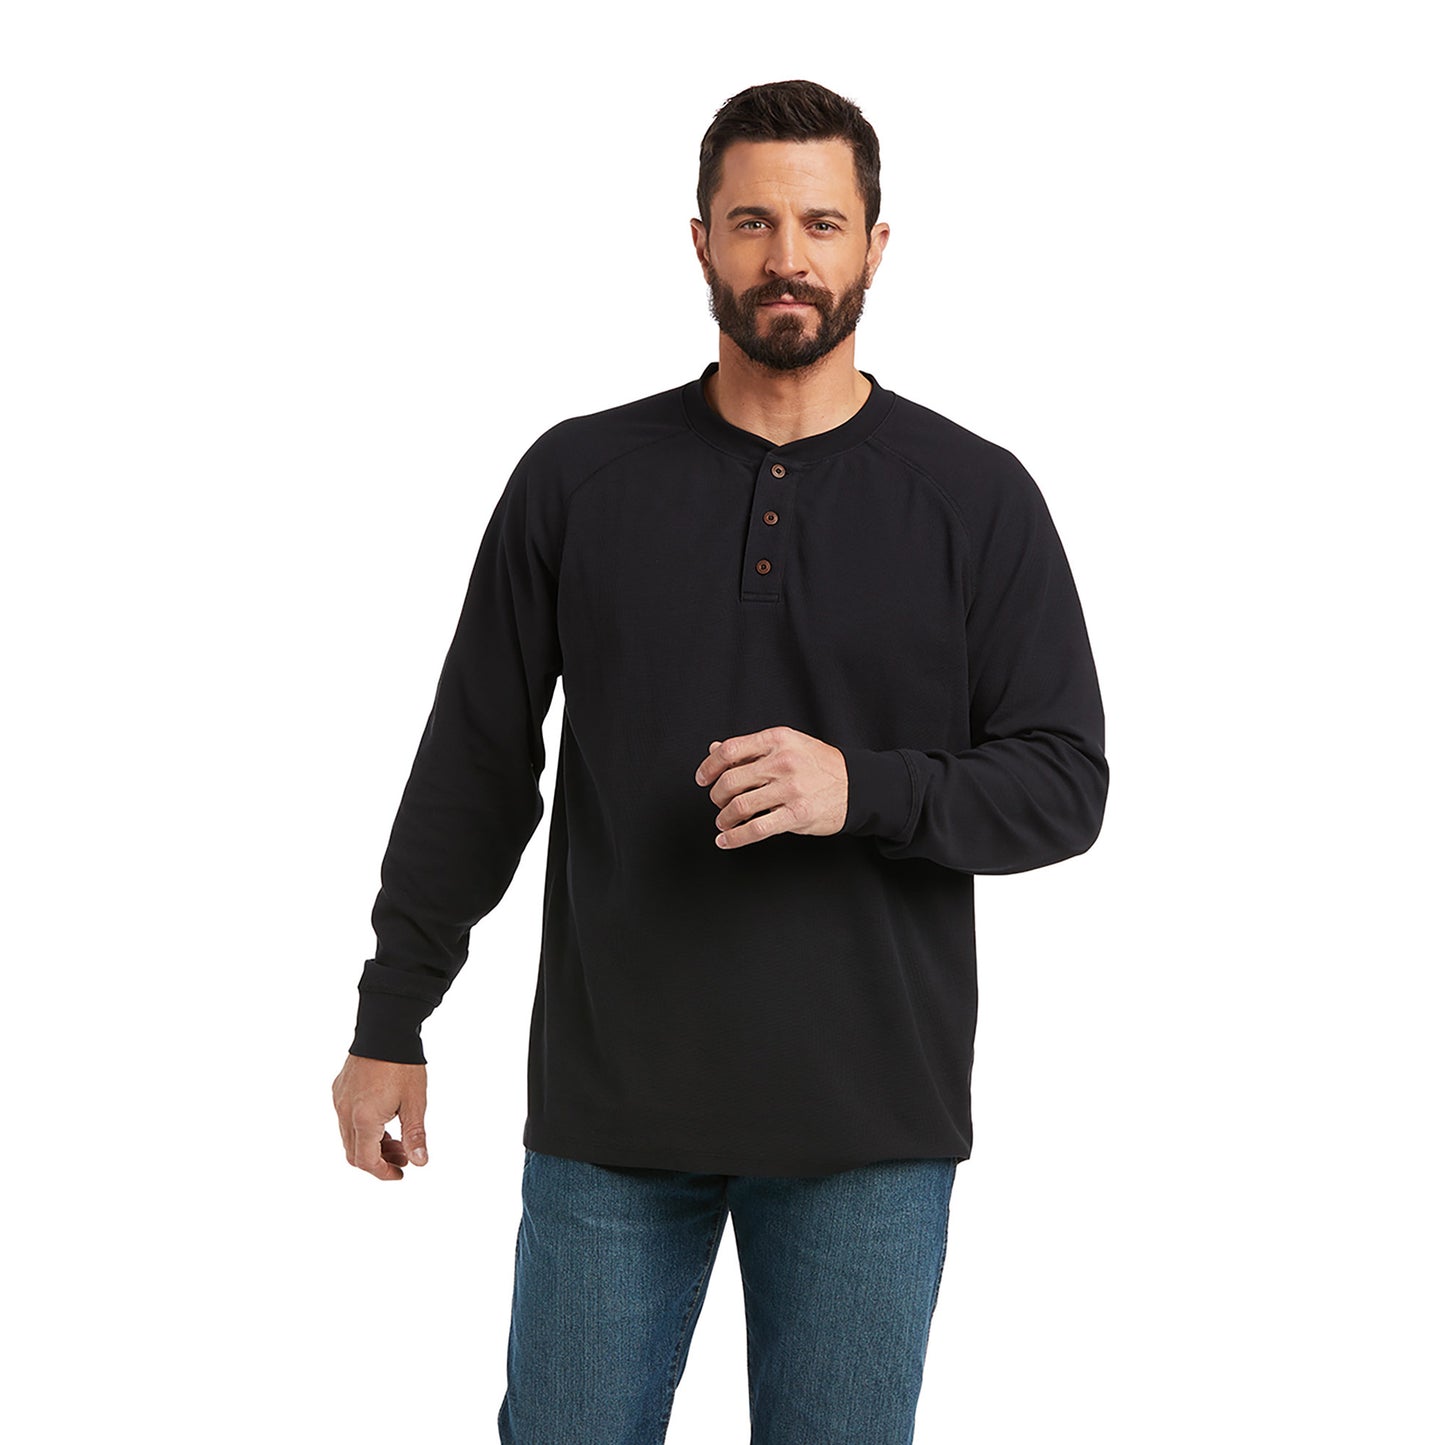 Ariat® Men's Rebar Thermal Long Sleeve Black Shirt 10037361